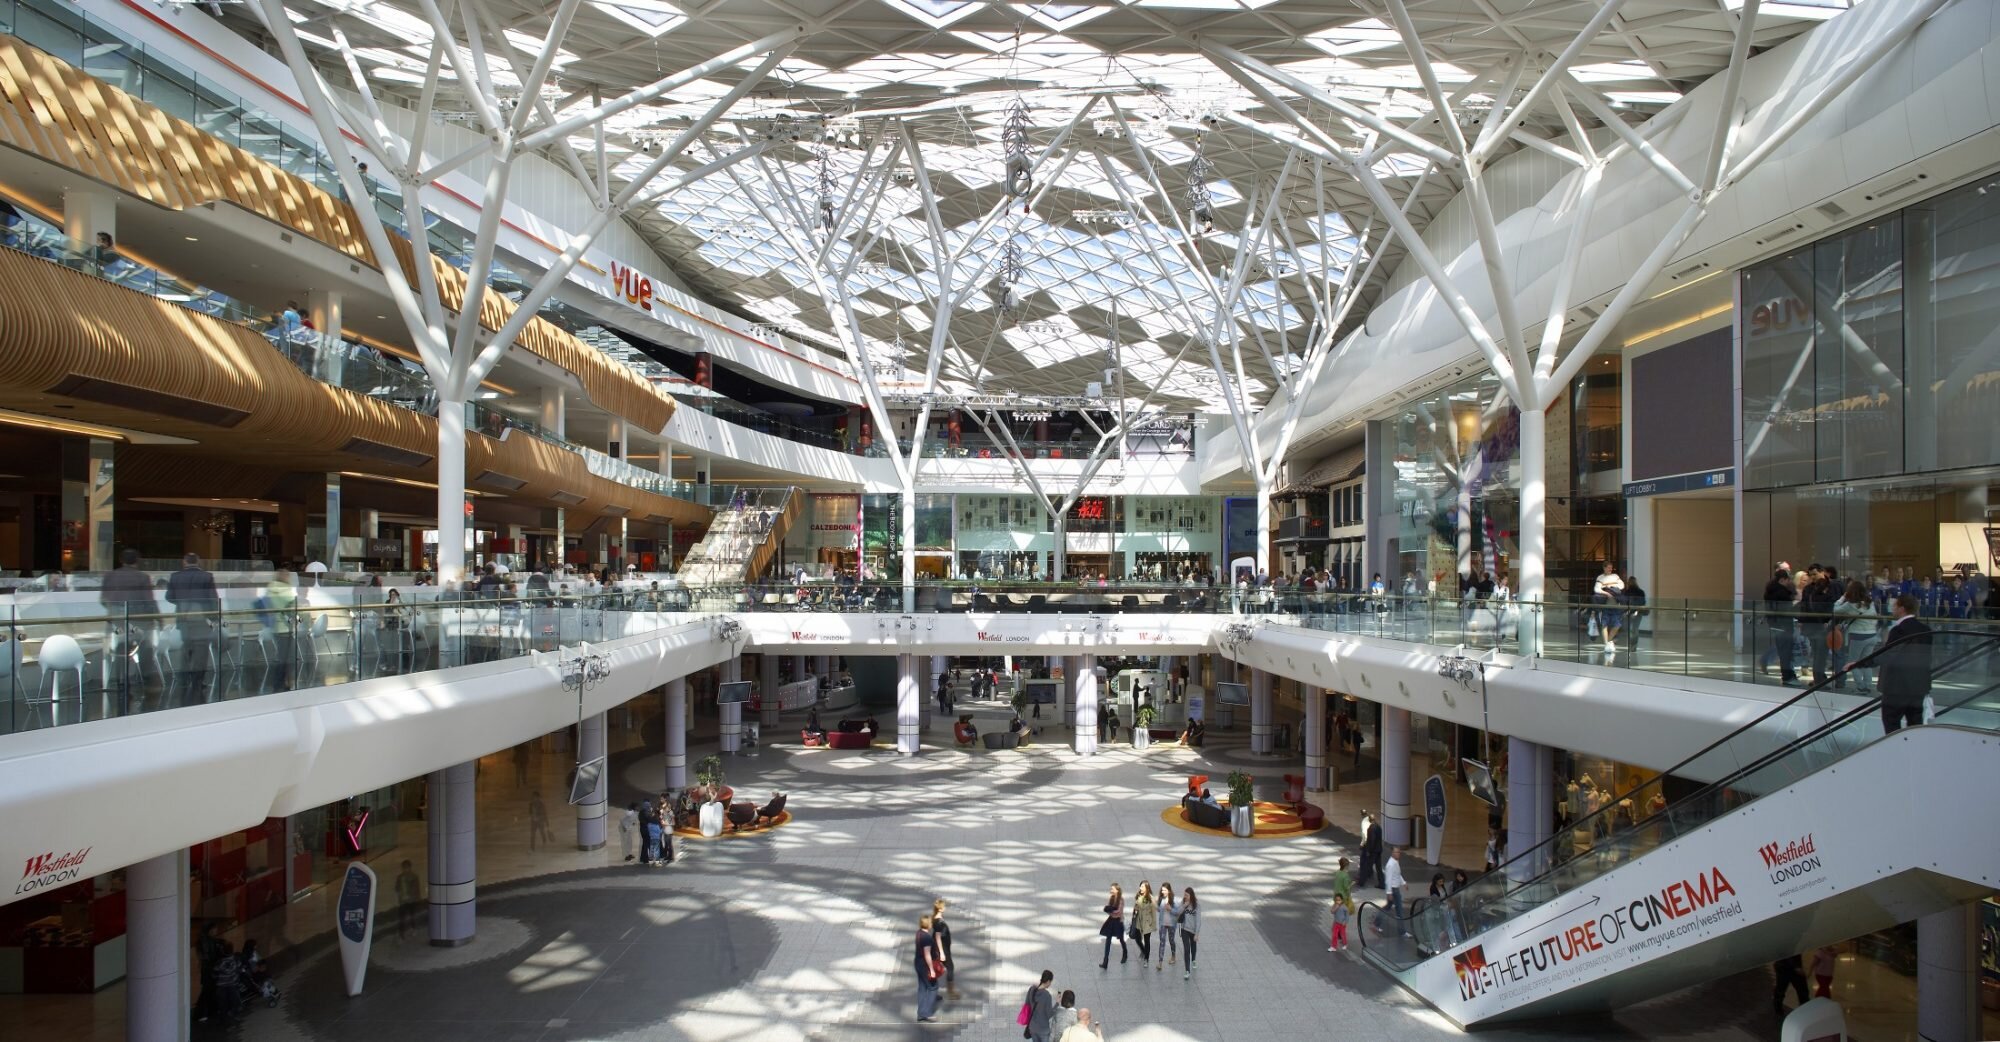 Westfield London Shopping Mall,United Kingdom, Architect London